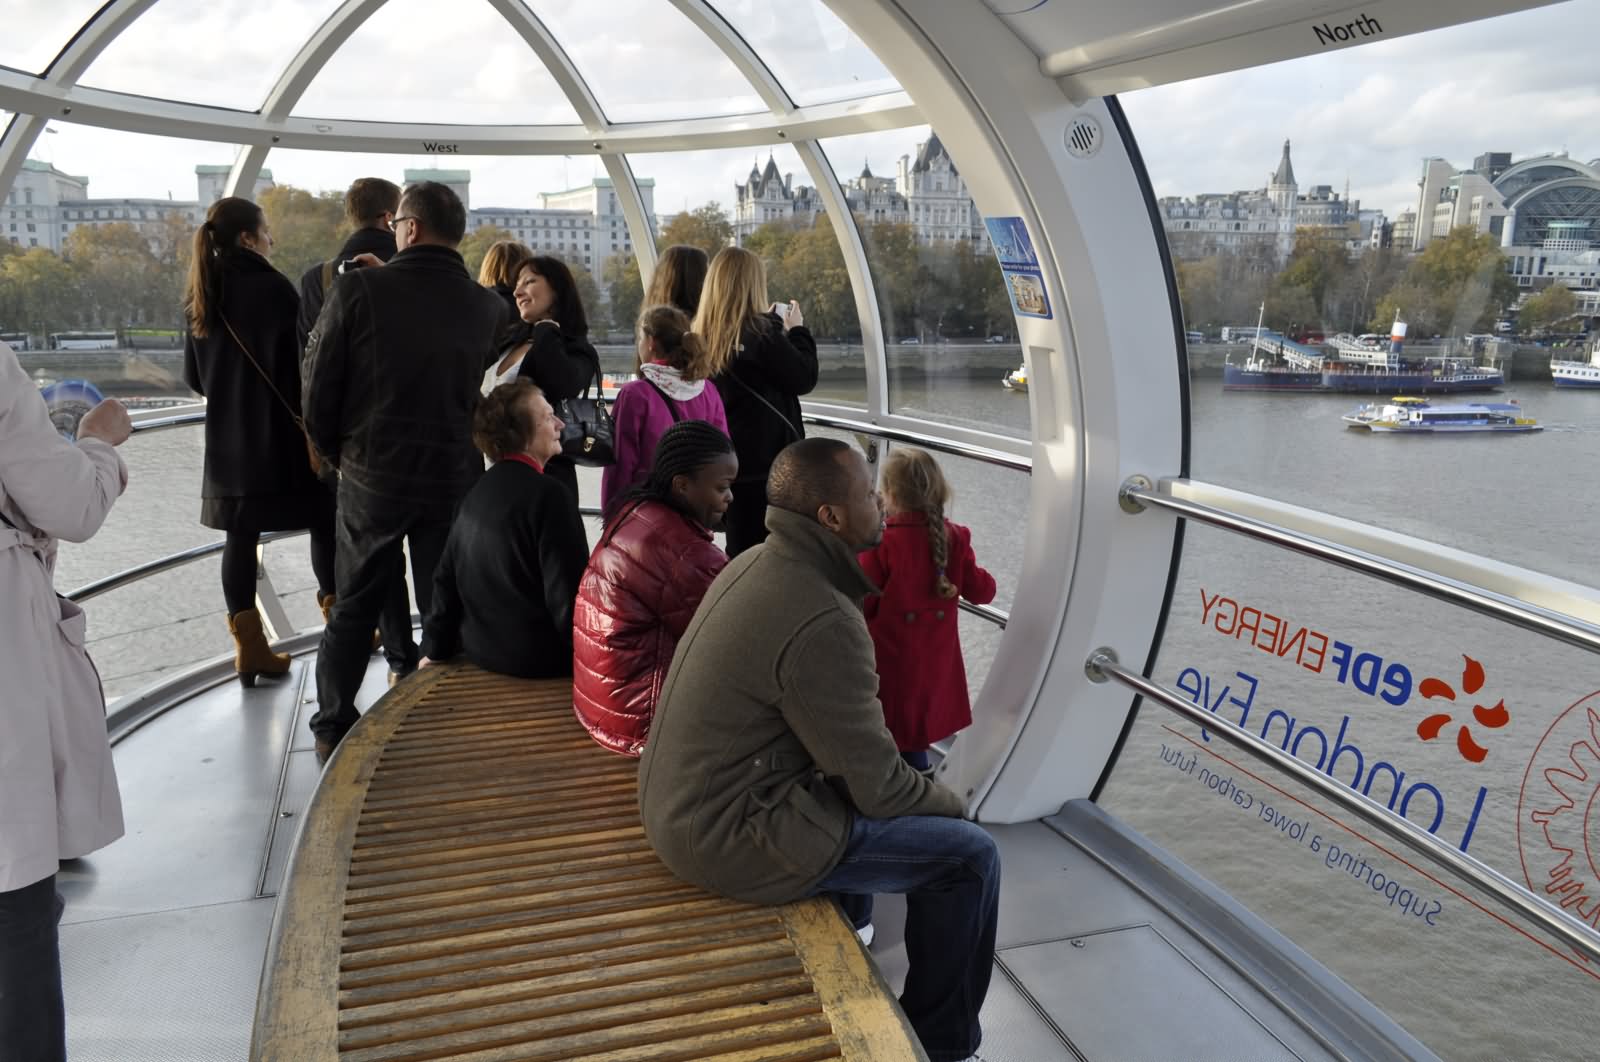 Inside The Capsule Of London Eye All Set For Lift Off